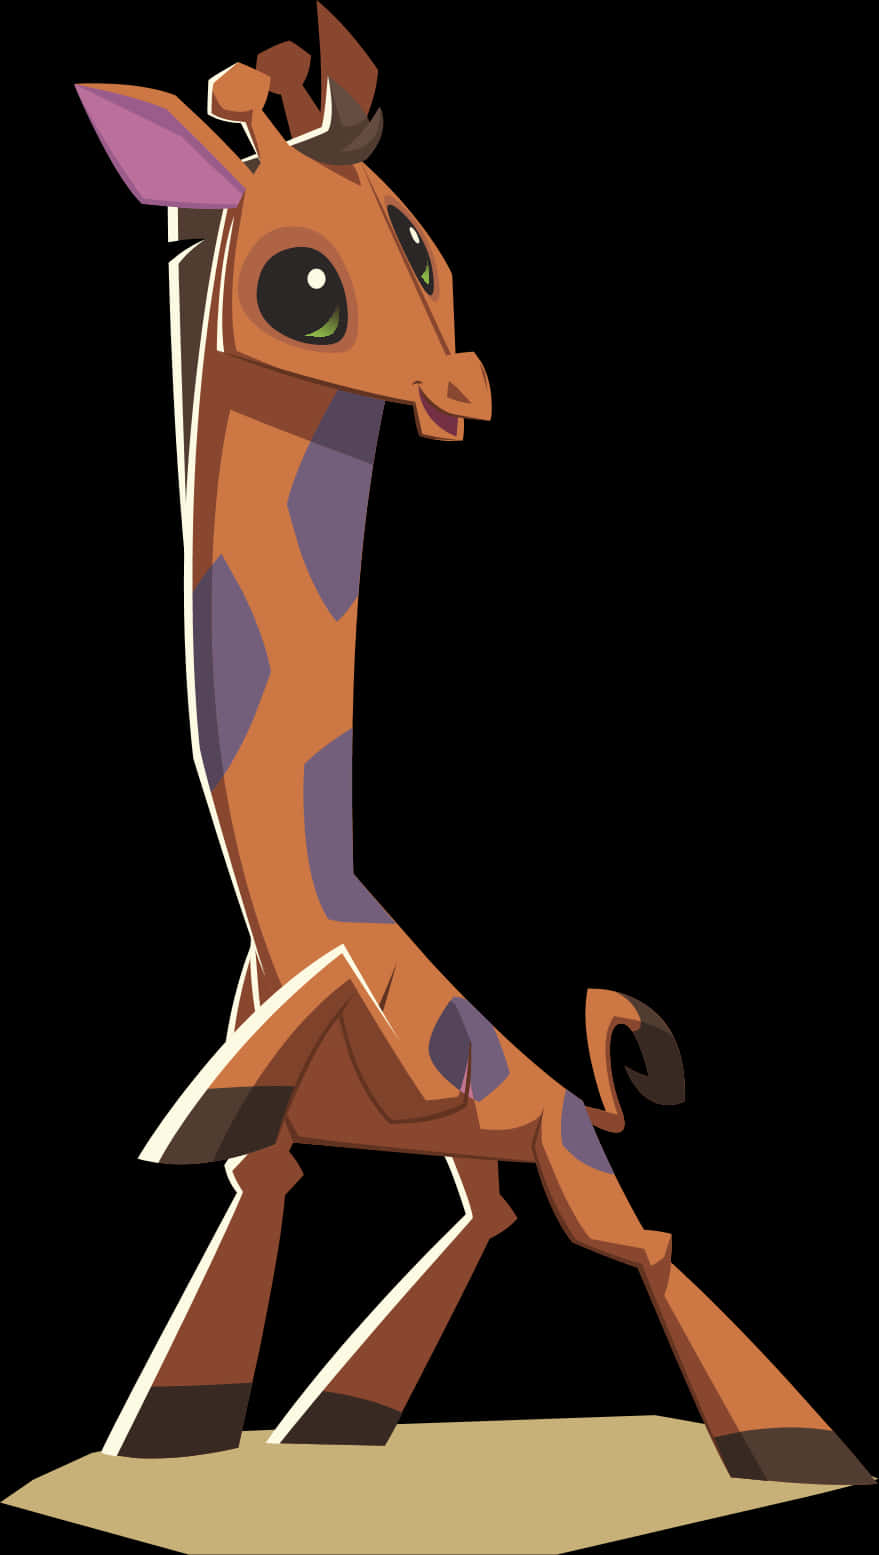 Cartoon Giraffe Standing On Its Hind Legs